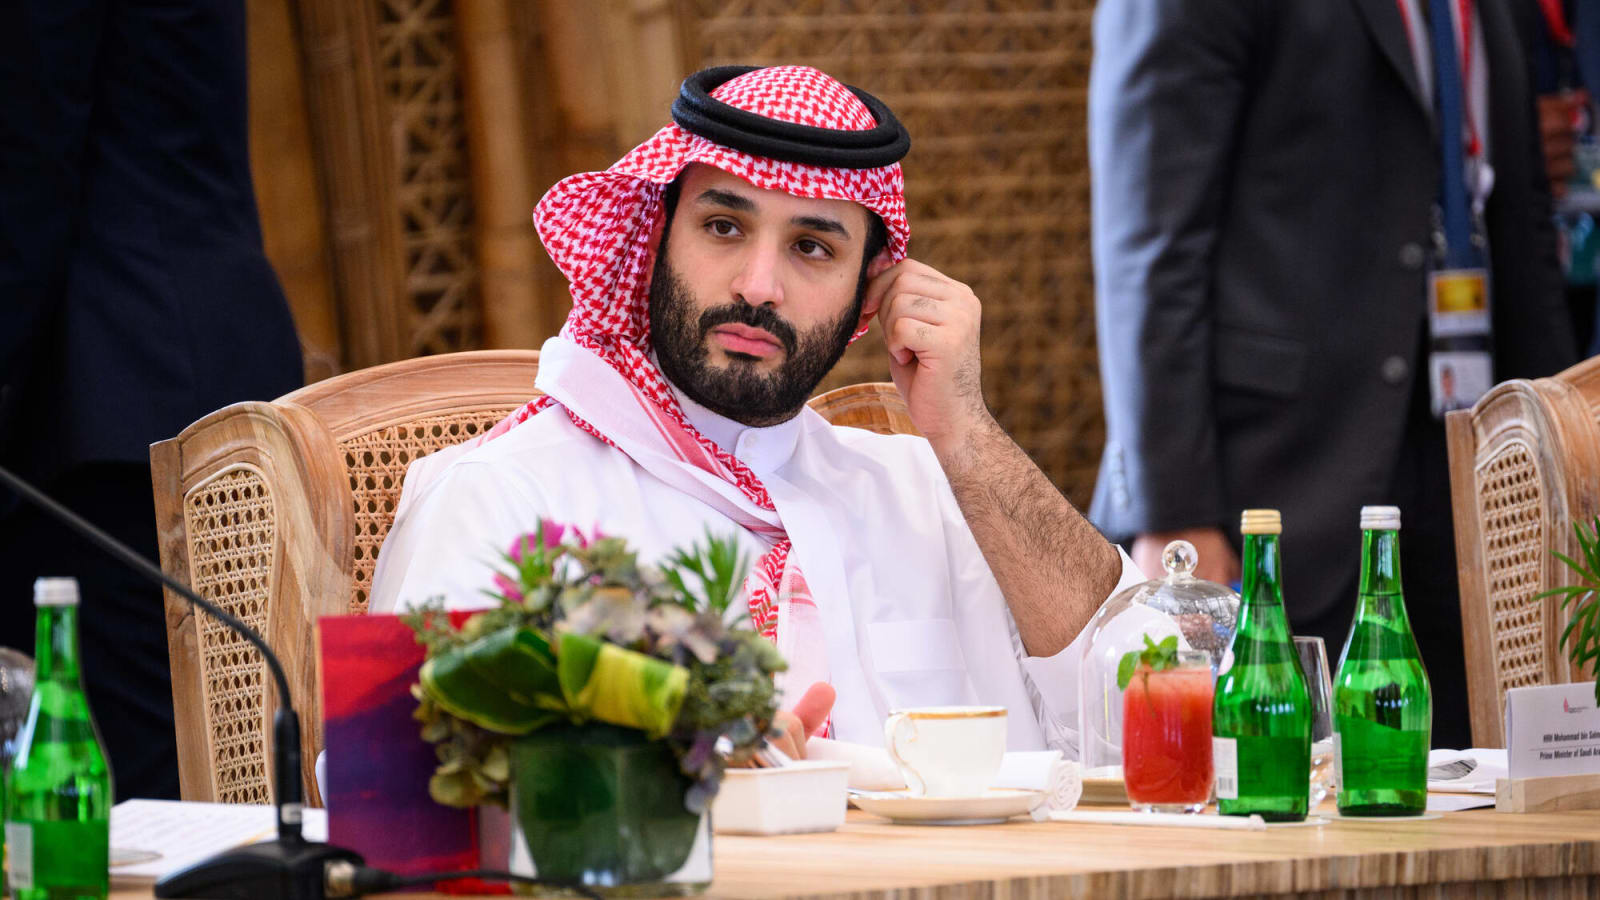 Crown prince of Saudi Arabia dismisses claims of 'sport washing'